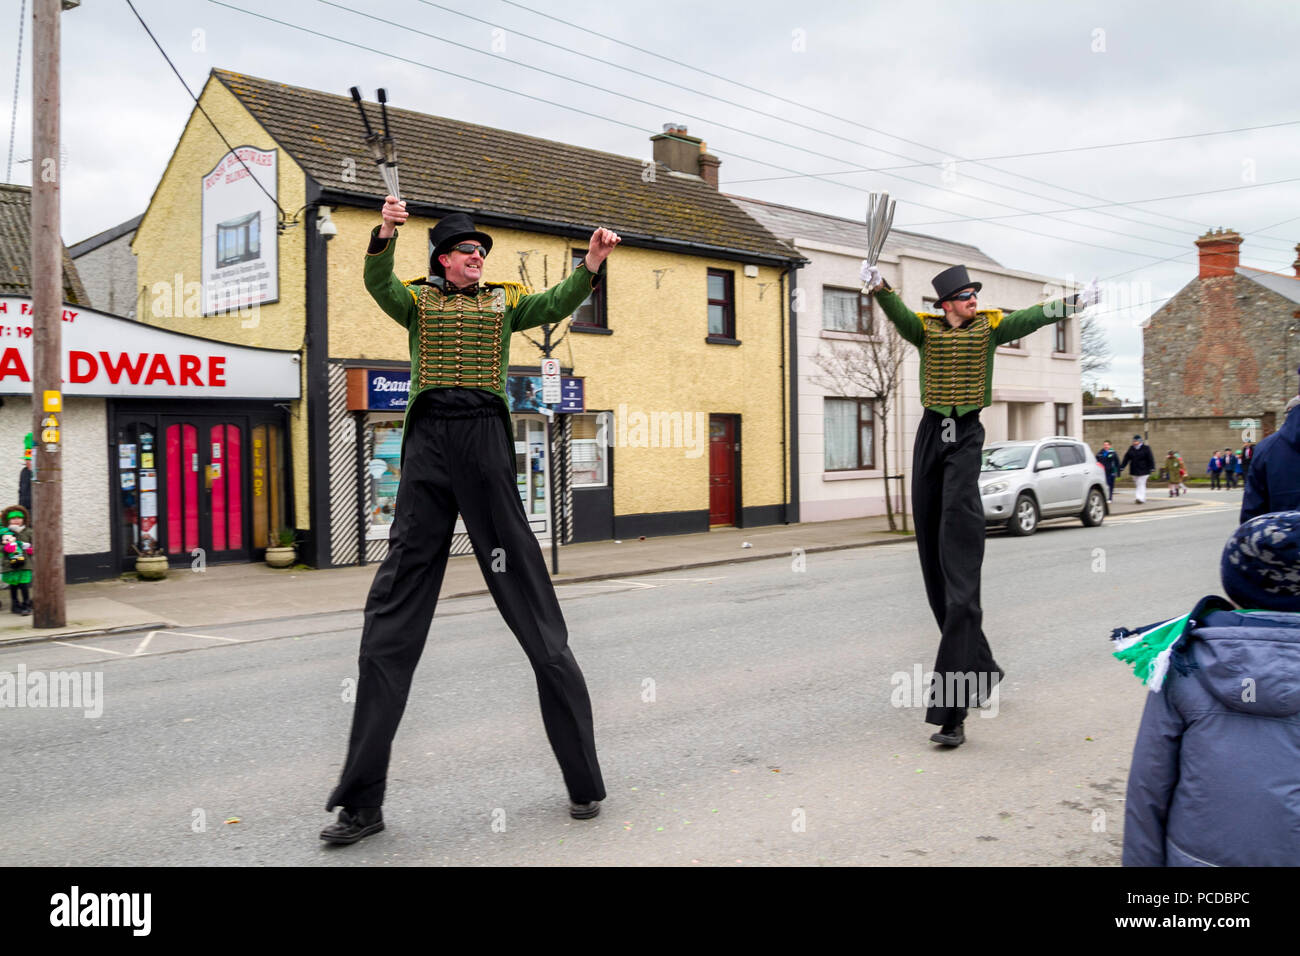 Tall men on stilts, stilt walkers parade costume Dublin Ireland Stock Photo